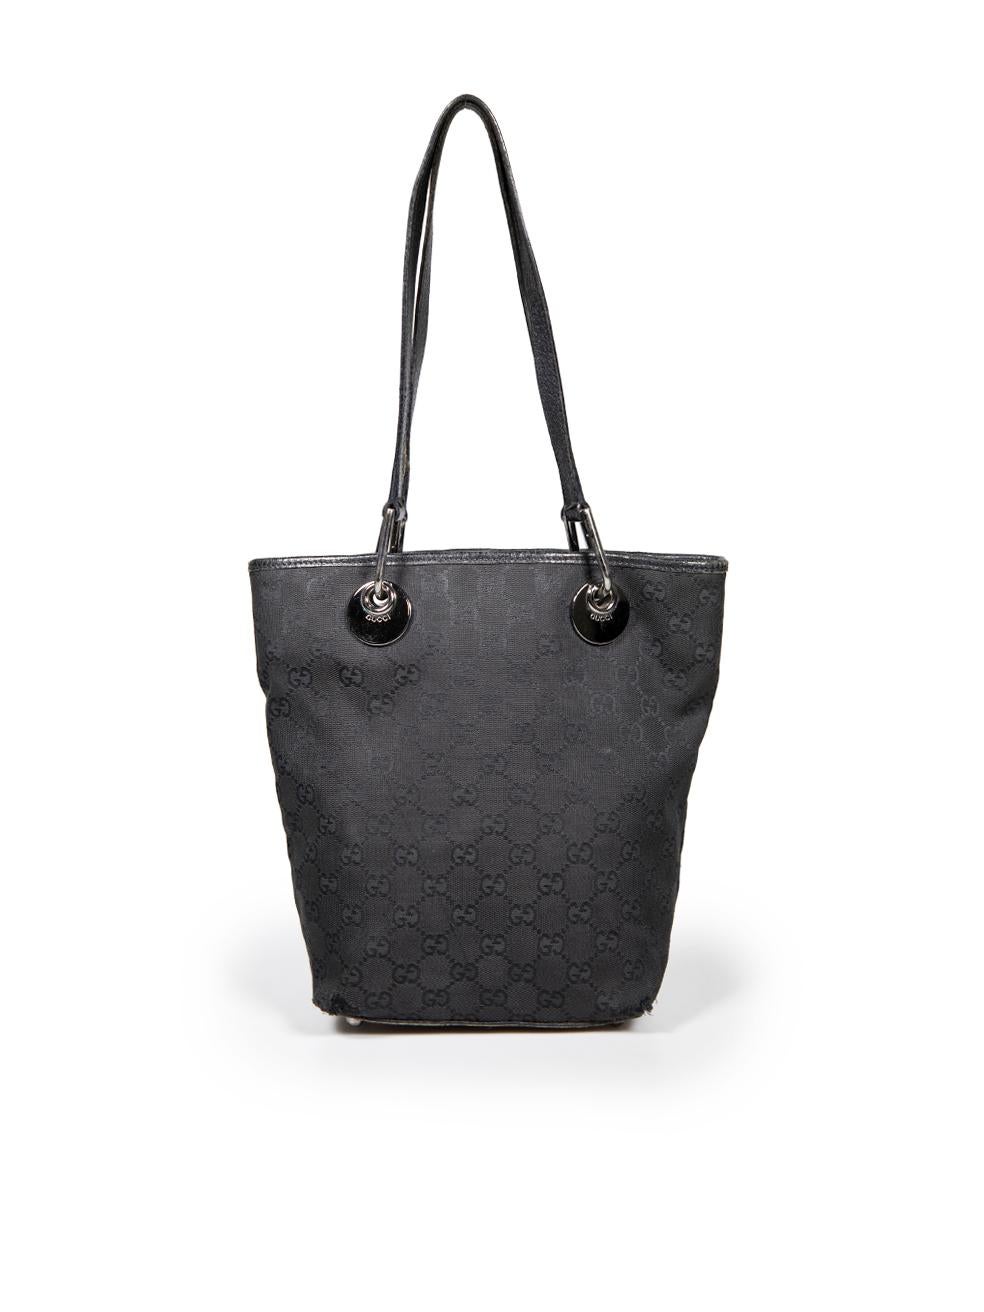 Gucci Black GG Monogram Small Eclipse Tote Bag In Good Condition For Sale In London, GB